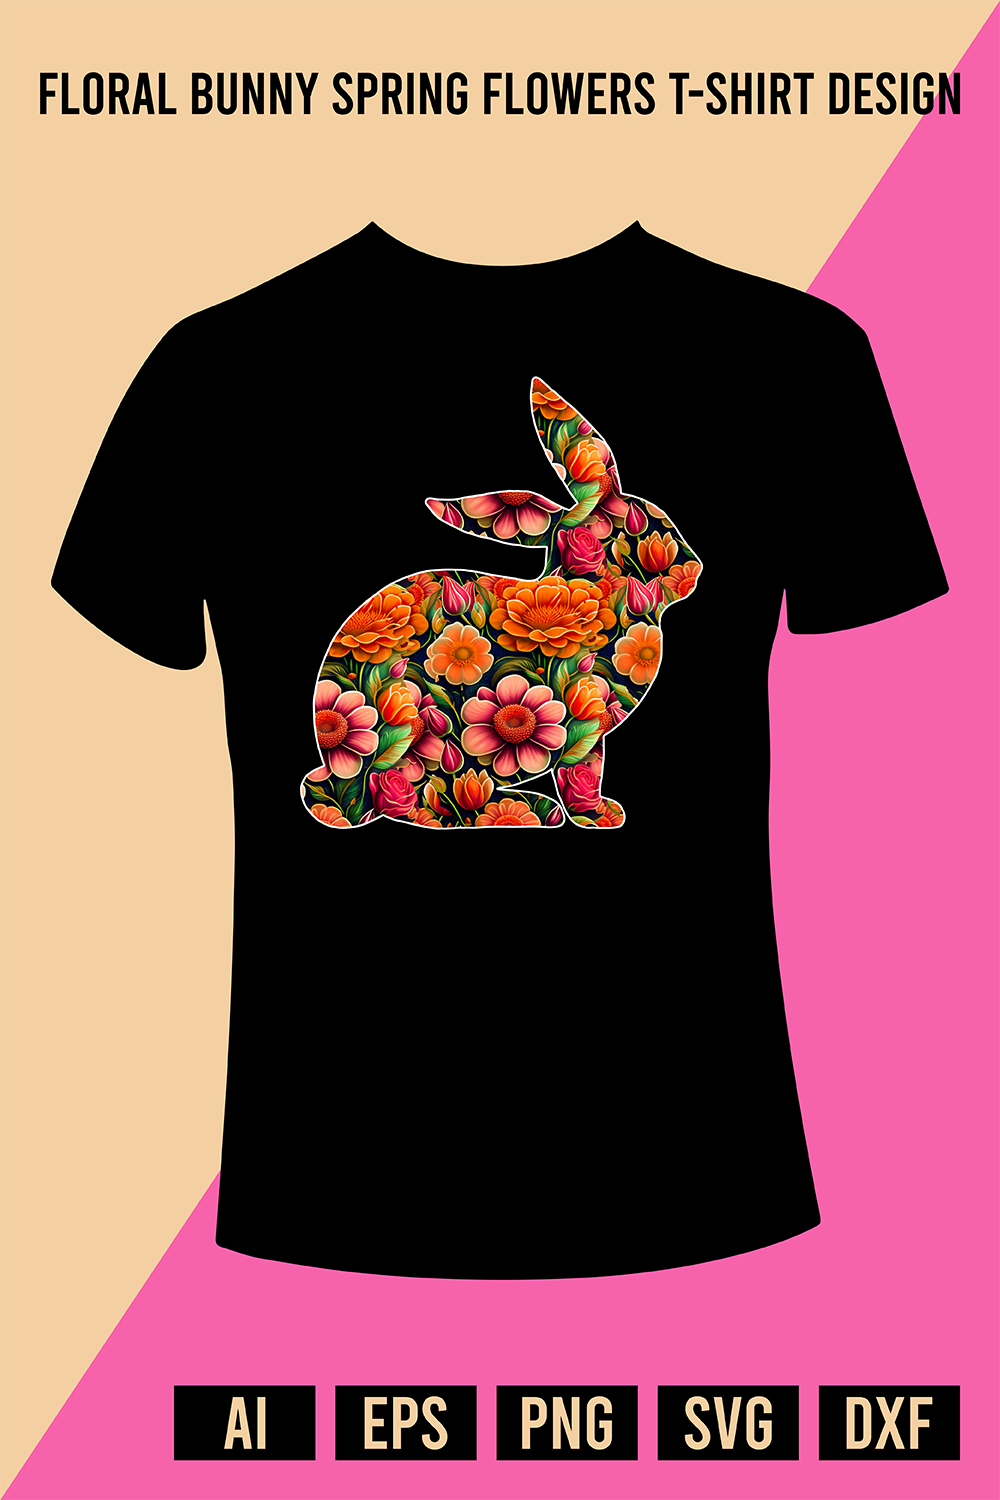 Floral Bunny Spring Flowers T-Shirt Design pinterest preview image.